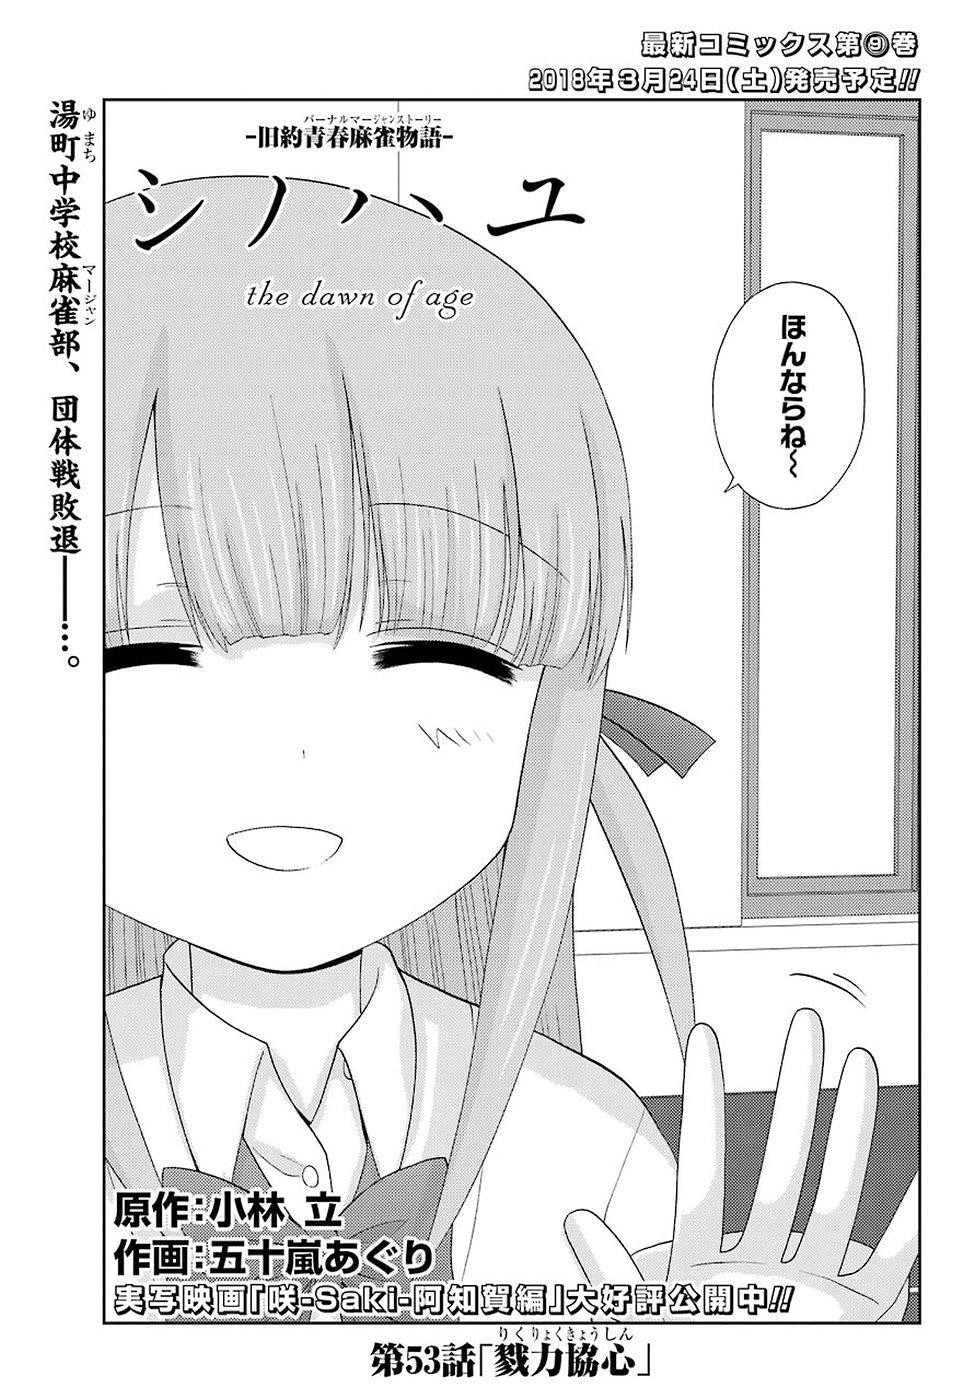 Shinohayu - The Dawn of Age Manga - Chapter 053 - Page 1